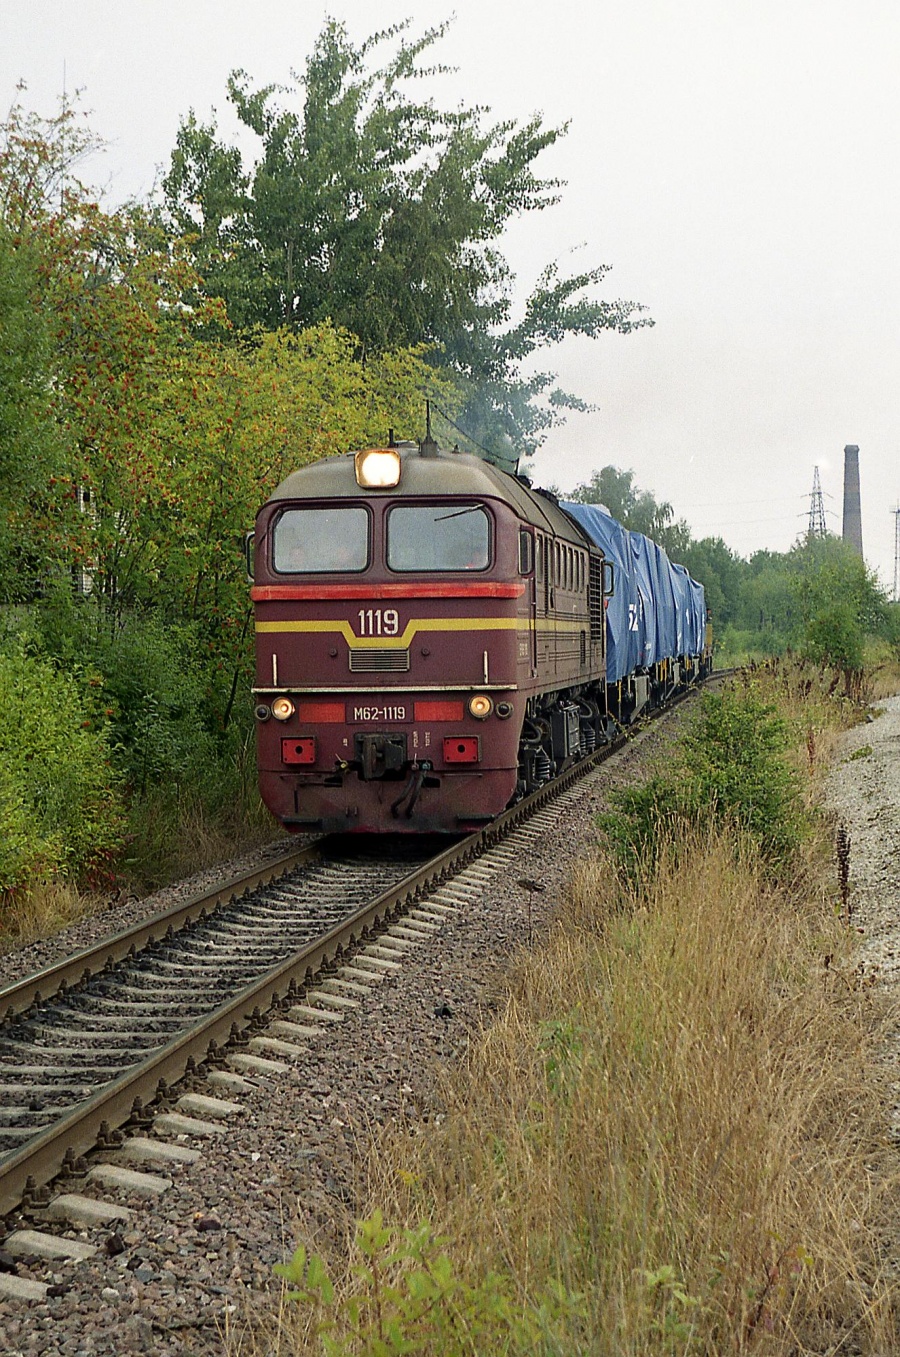 M62-1286 (EVR M62-1119)+C36-7i locos straight from port+ČME3-4280 (EVR ČME3-1324) 1/3
01.08.2002
Tallinn- Kopli
